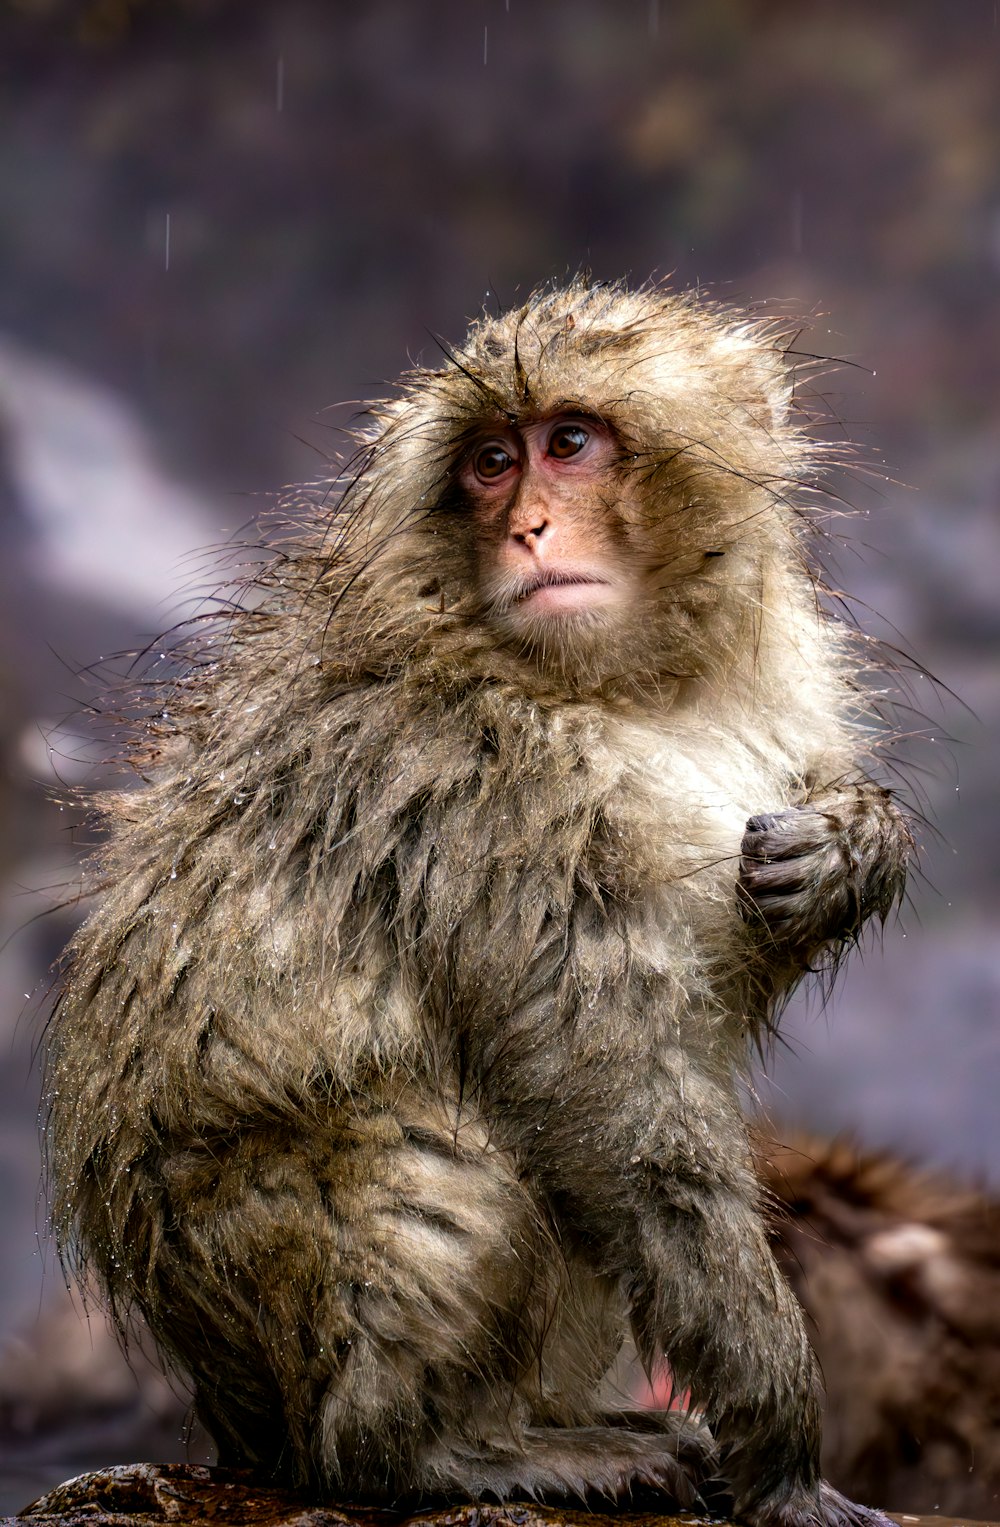 a monkey sitting on a rock in the rain